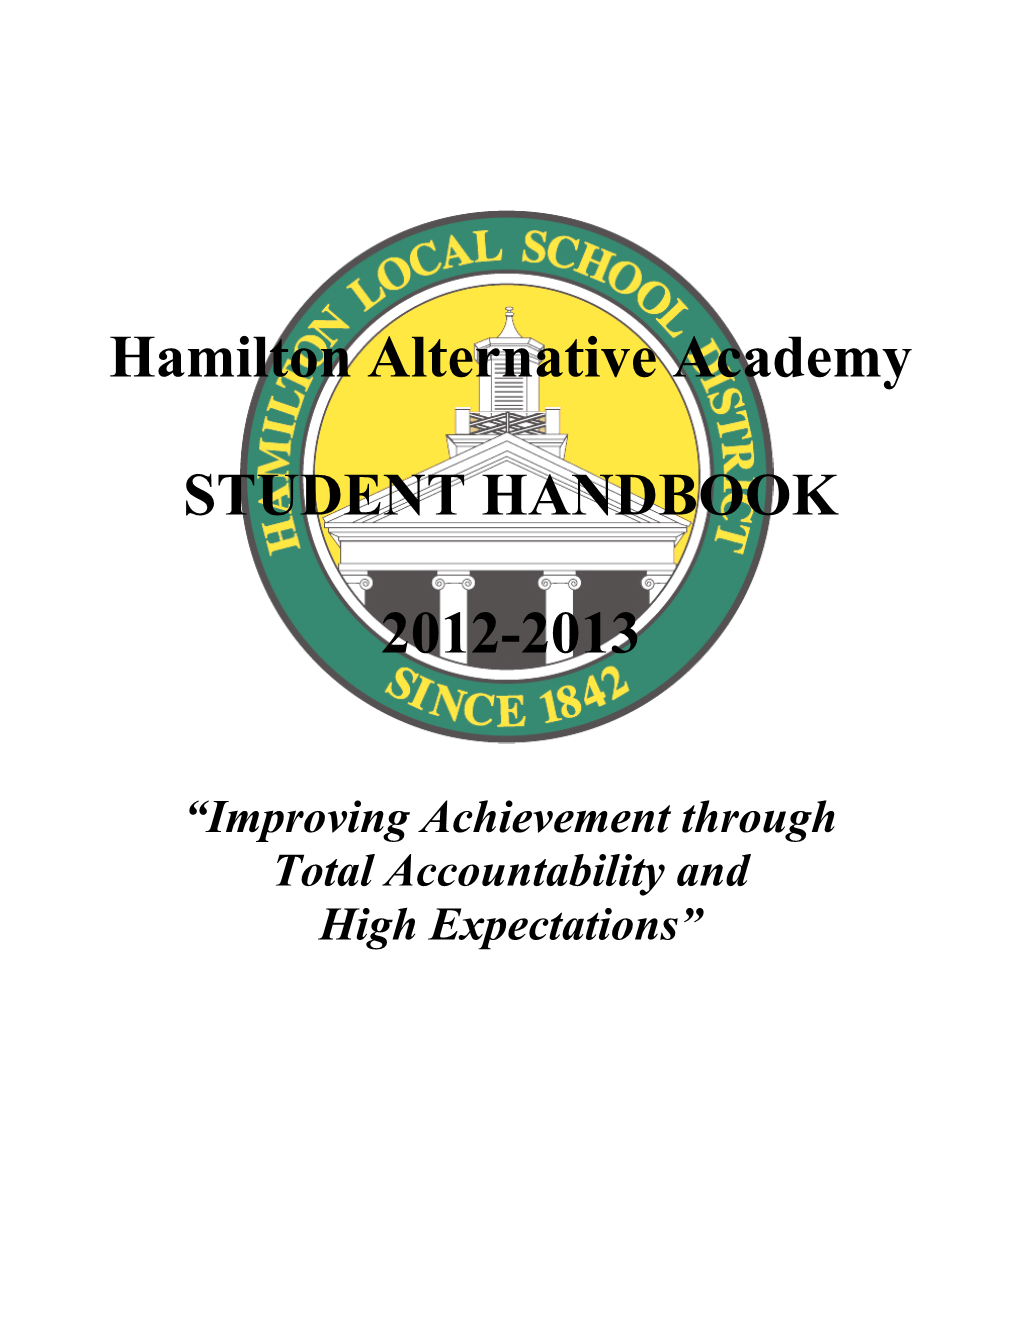 Hamilton Alternative Academy Student Handbook 2012-2013 Page [1]